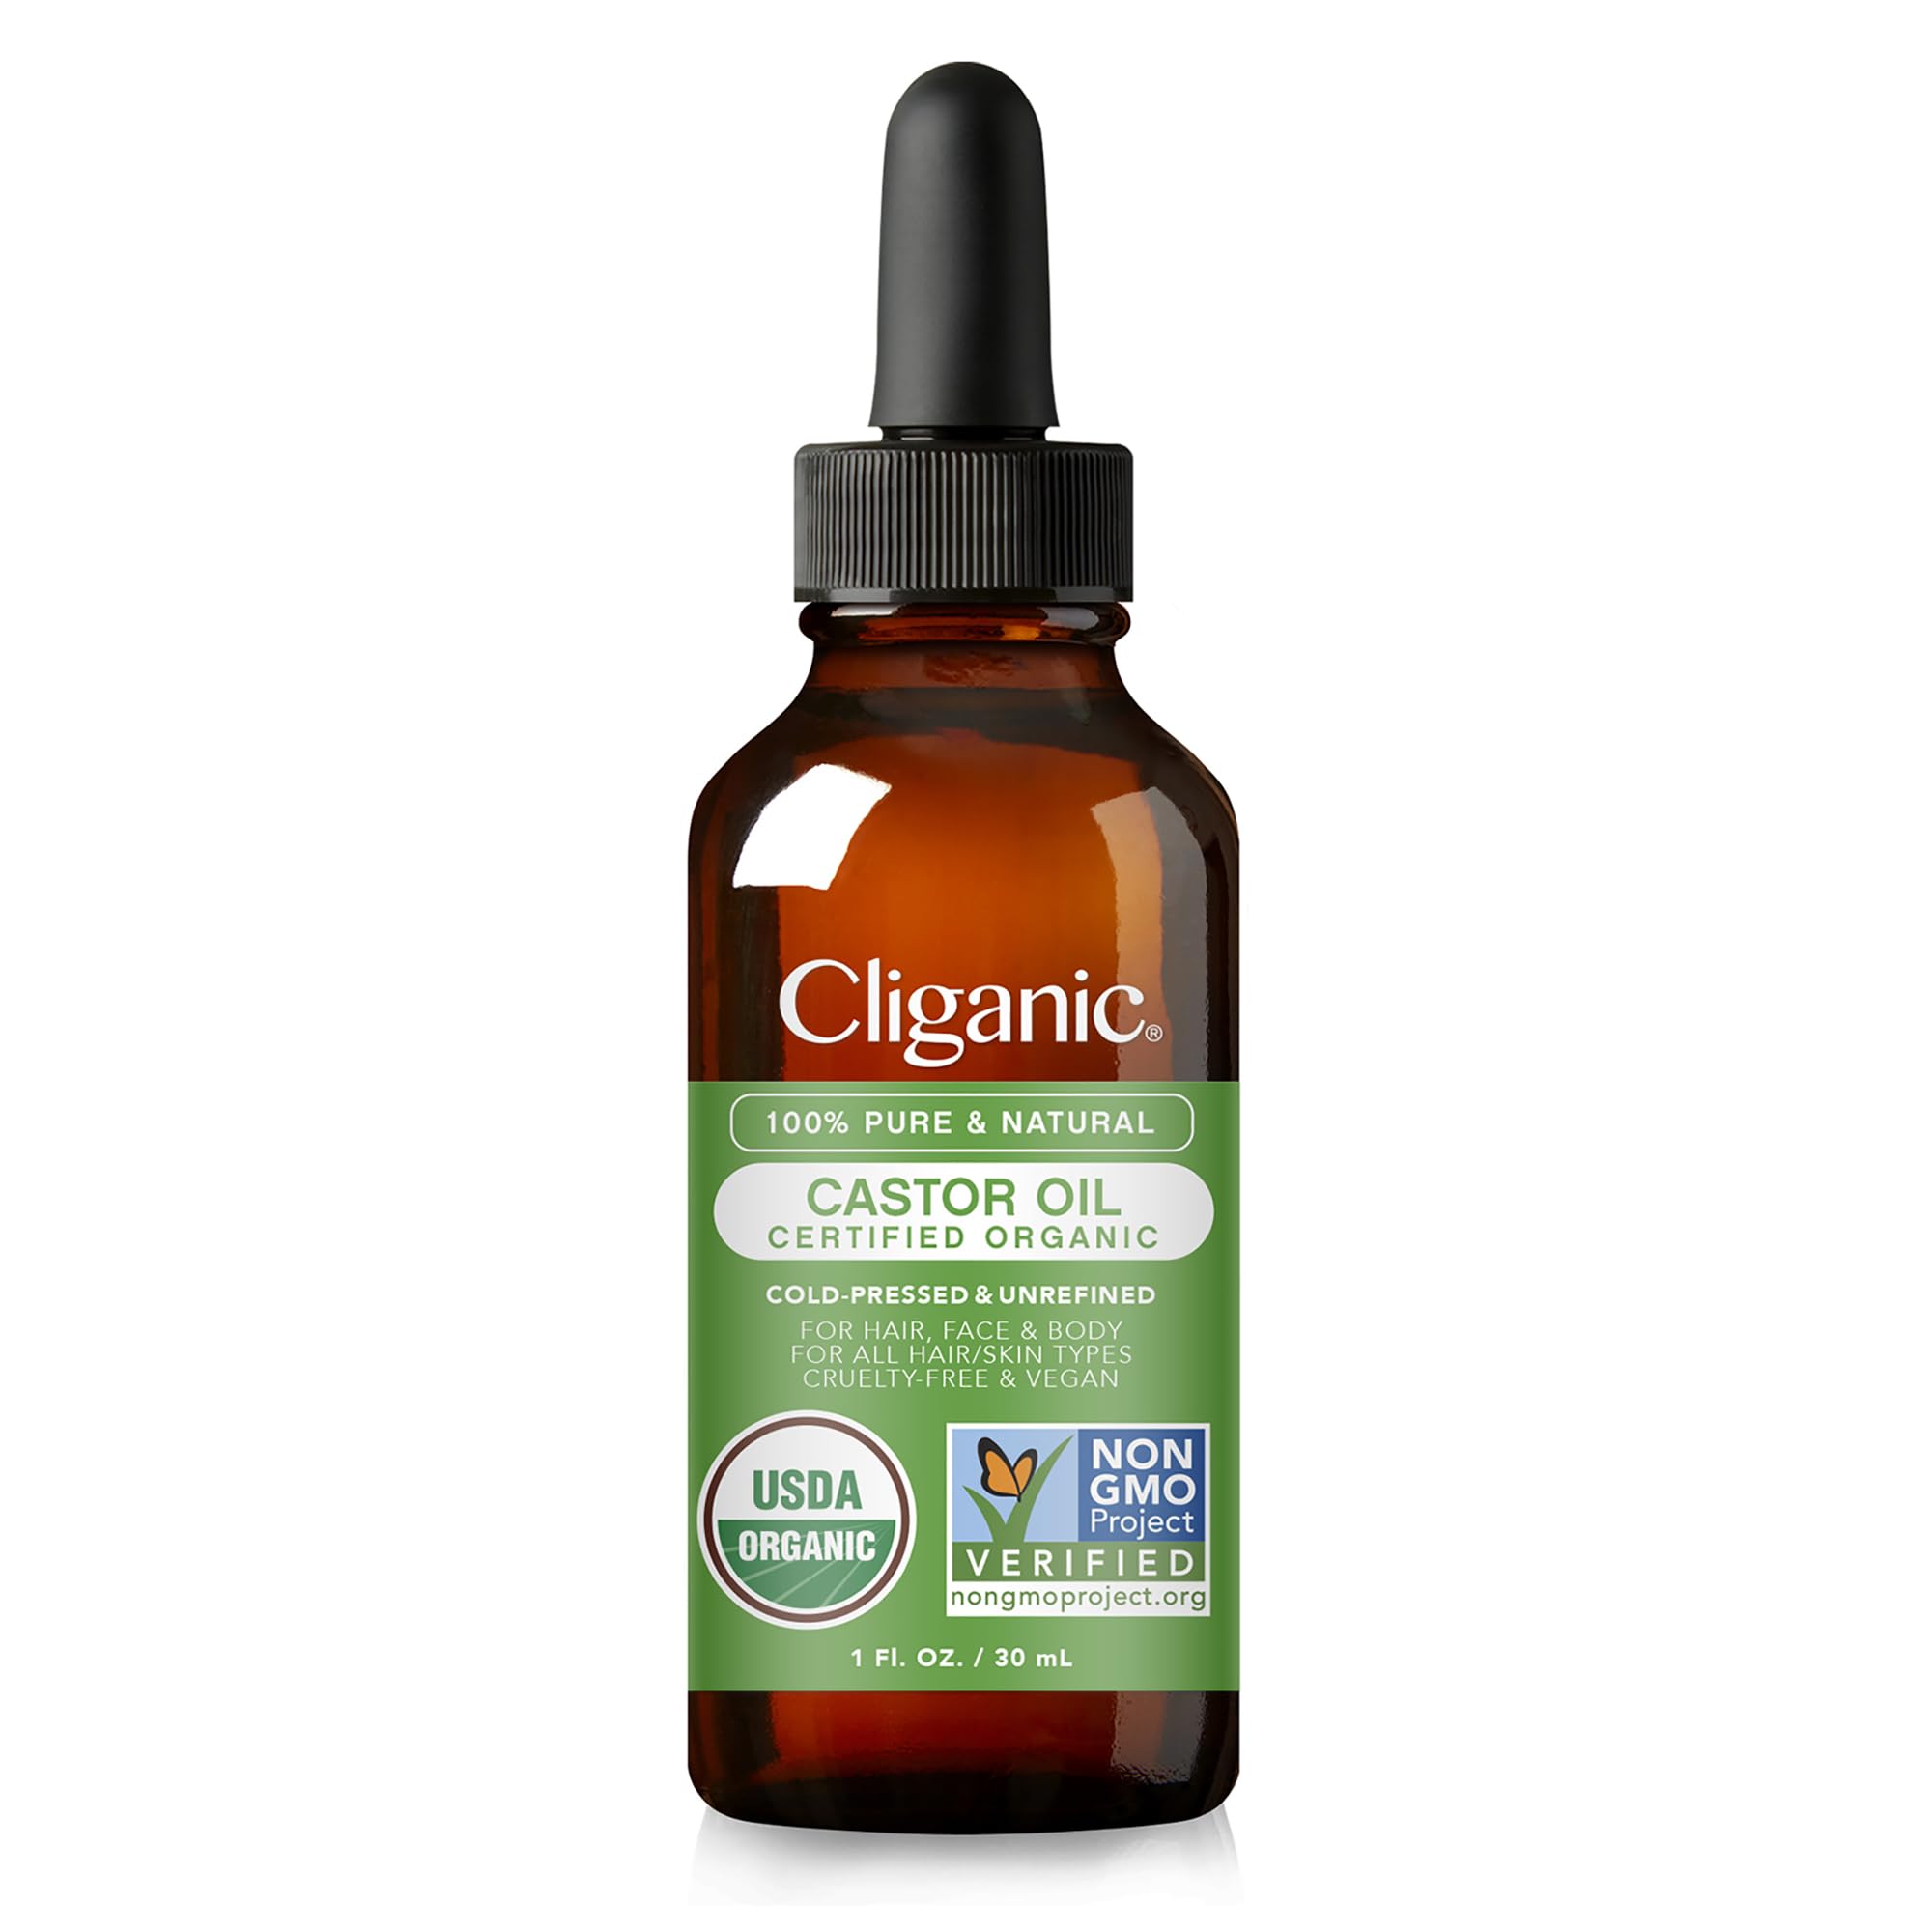 Cliganic Organic Castor Oil, 100% Pure (4oz with Eyelash Kit) - For Eyelashes, Eyebrows, Hair & Skin